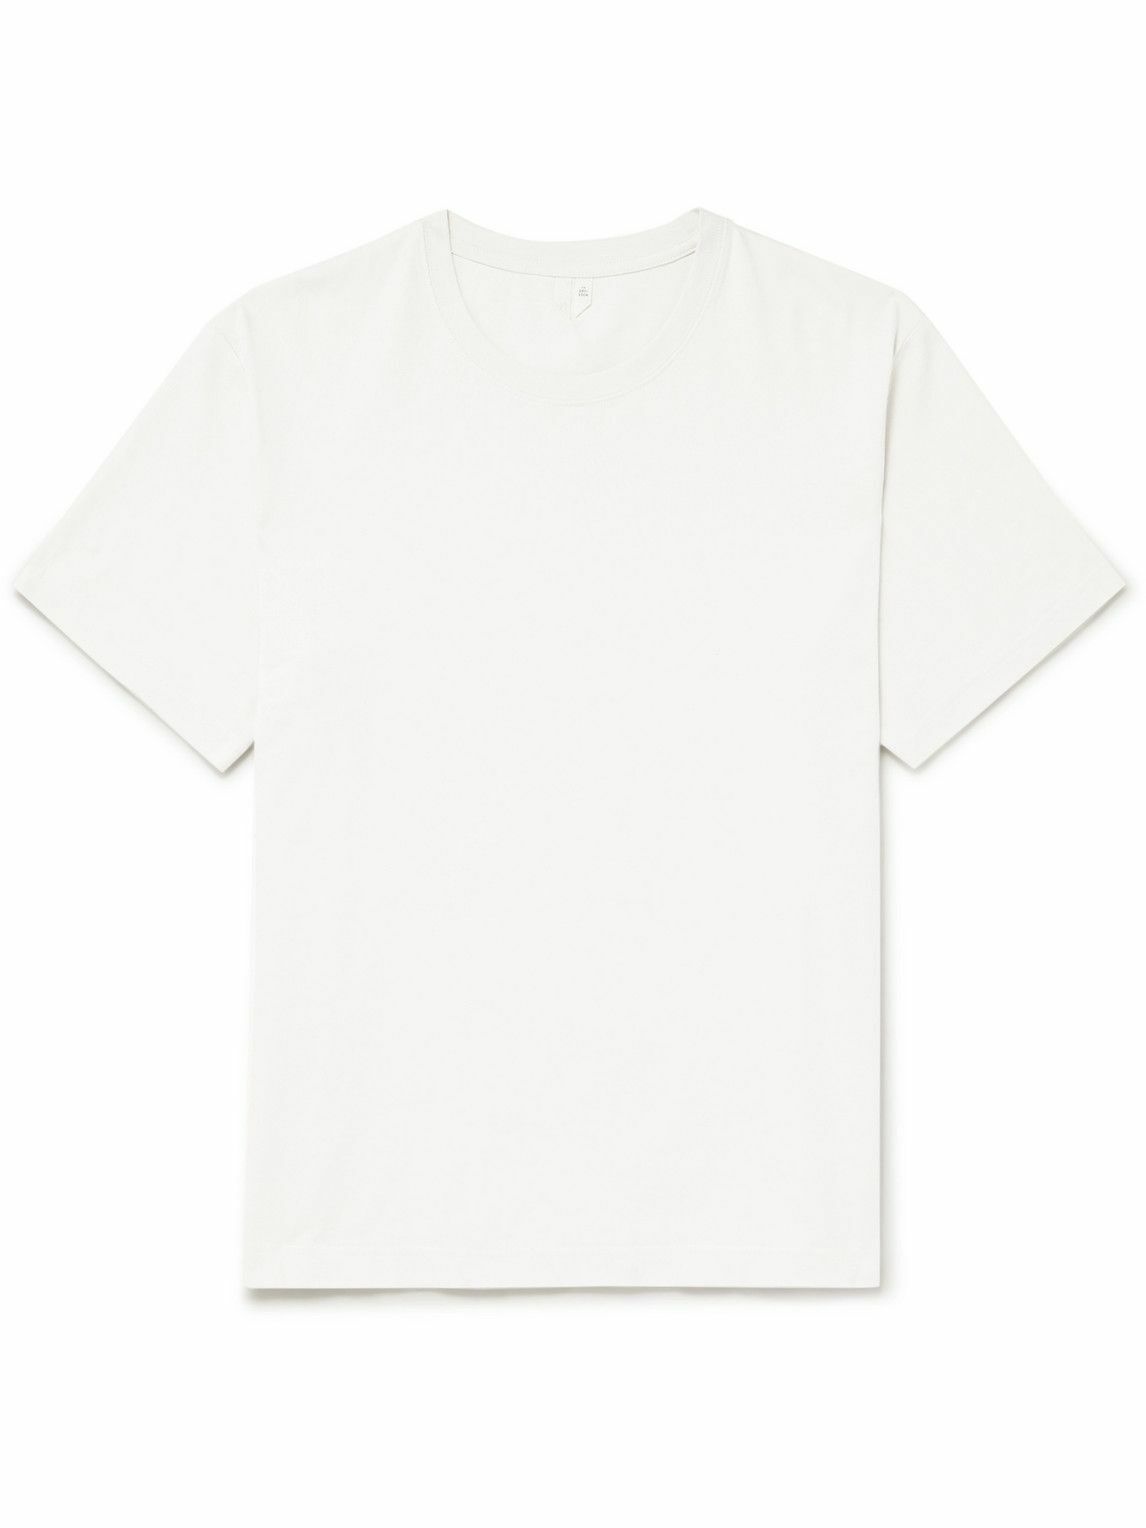 ARKET - Niko Cotton-Jersey T-Shirt - White